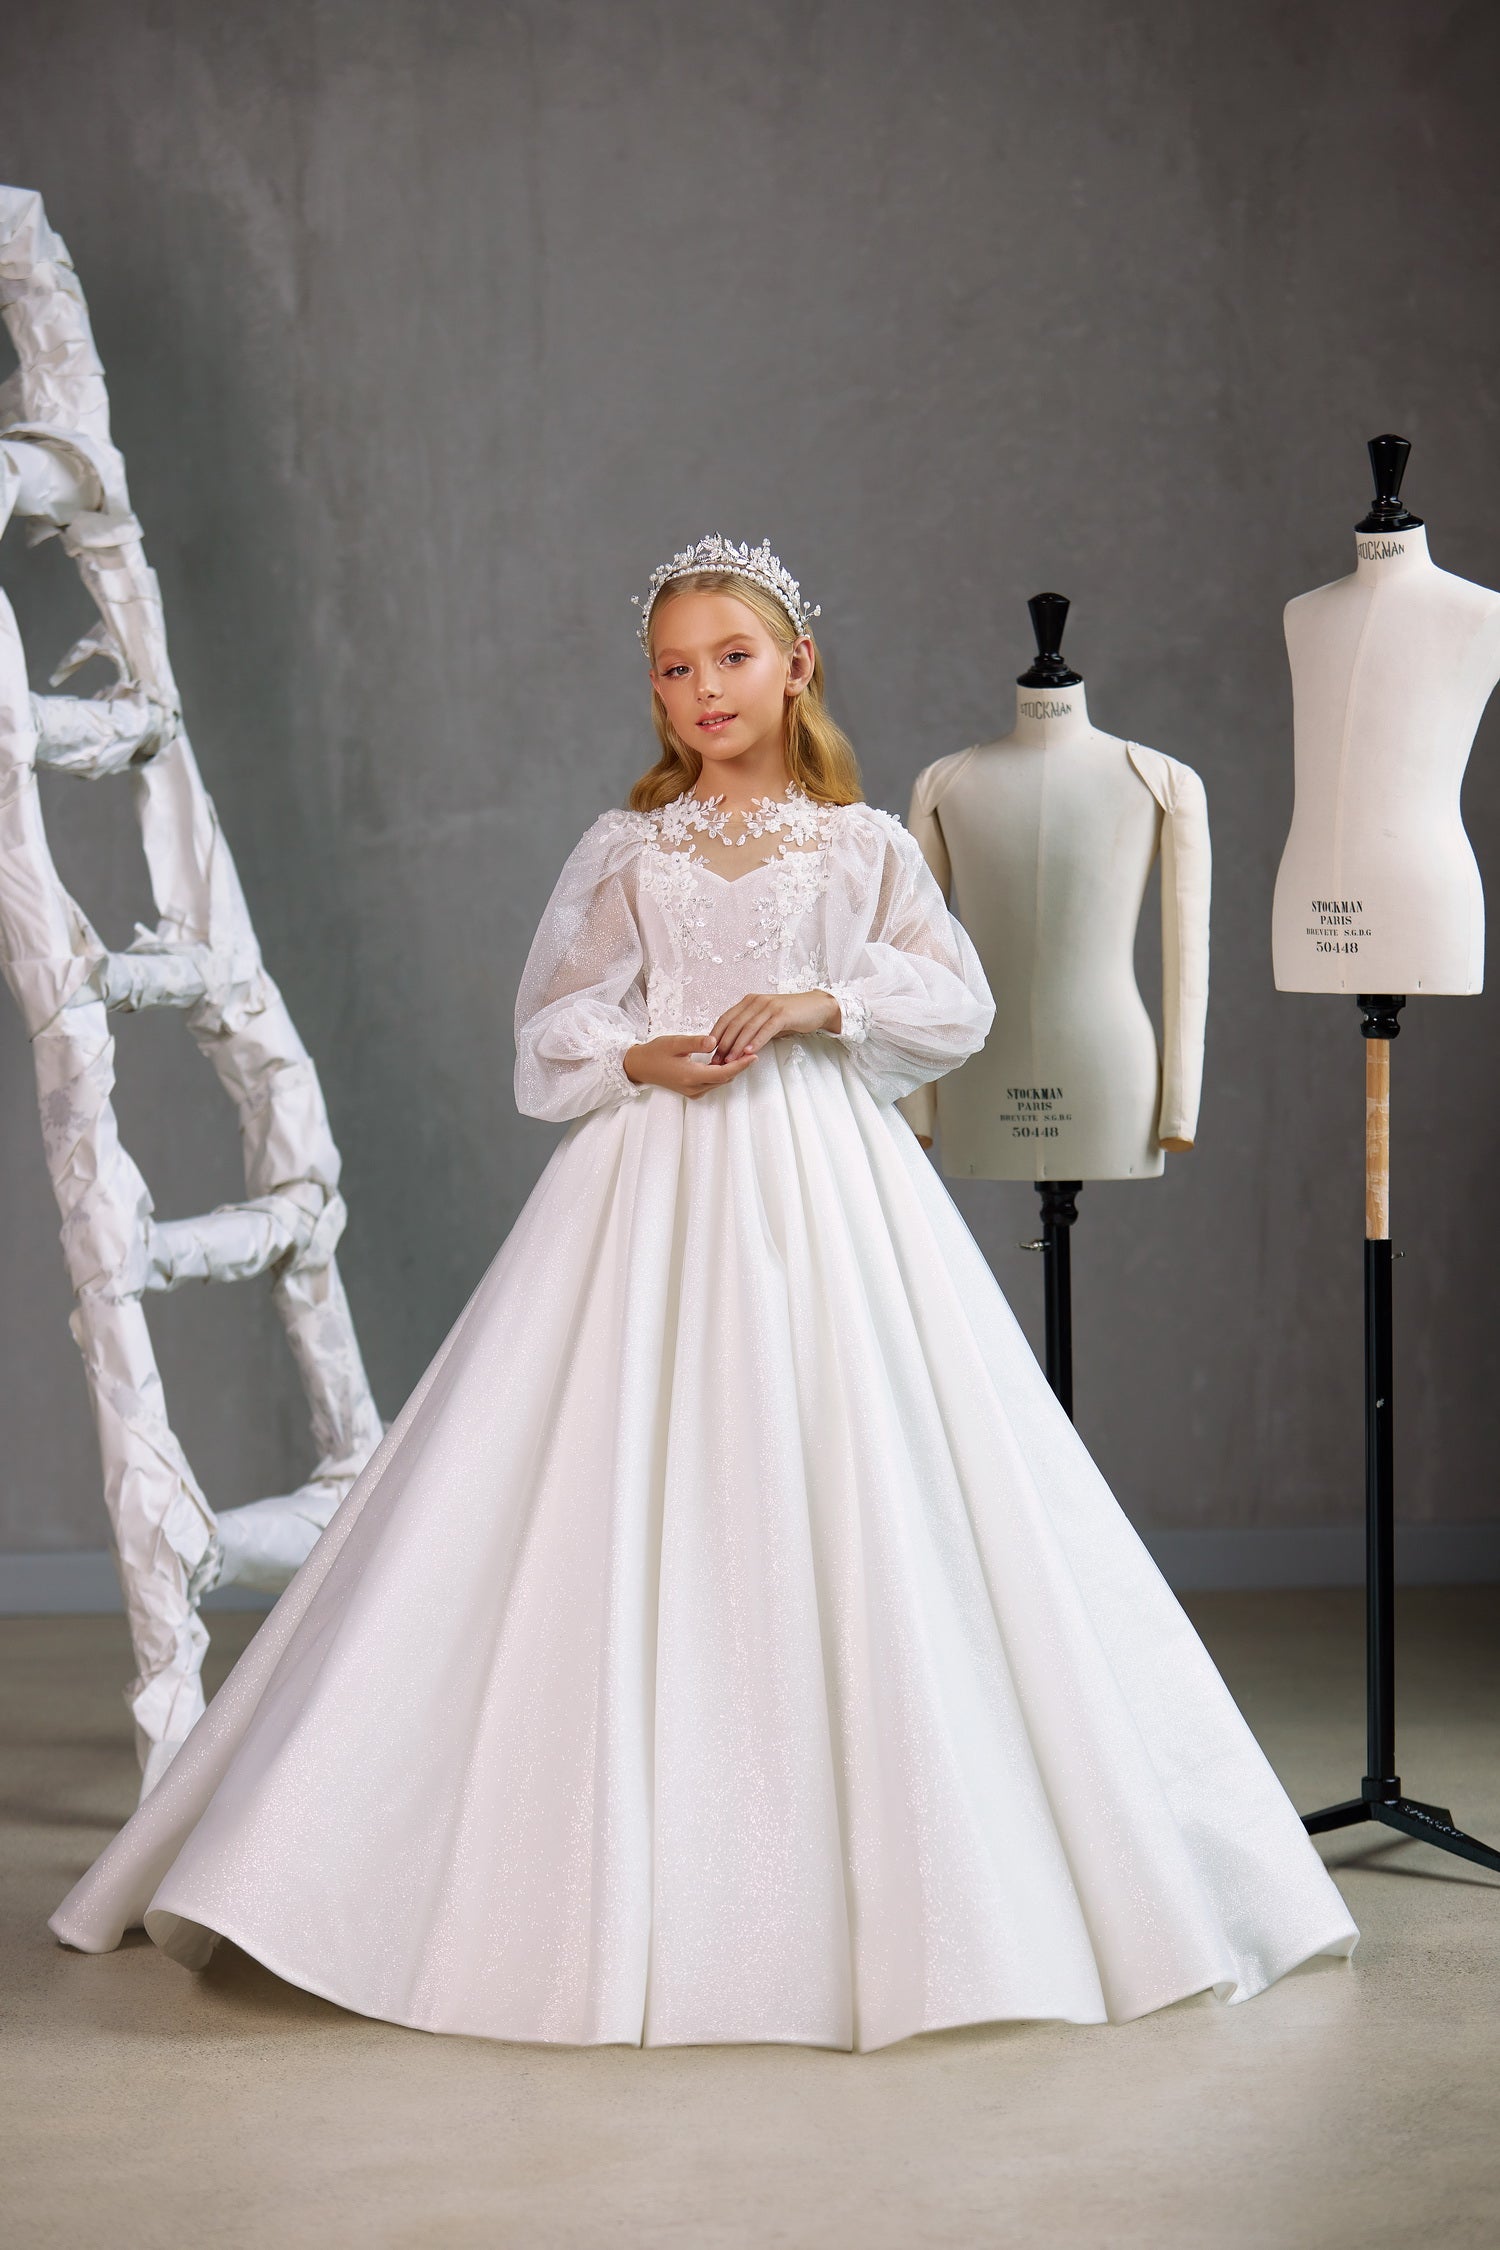 Pentelei Children's Sparkly Princess Gown